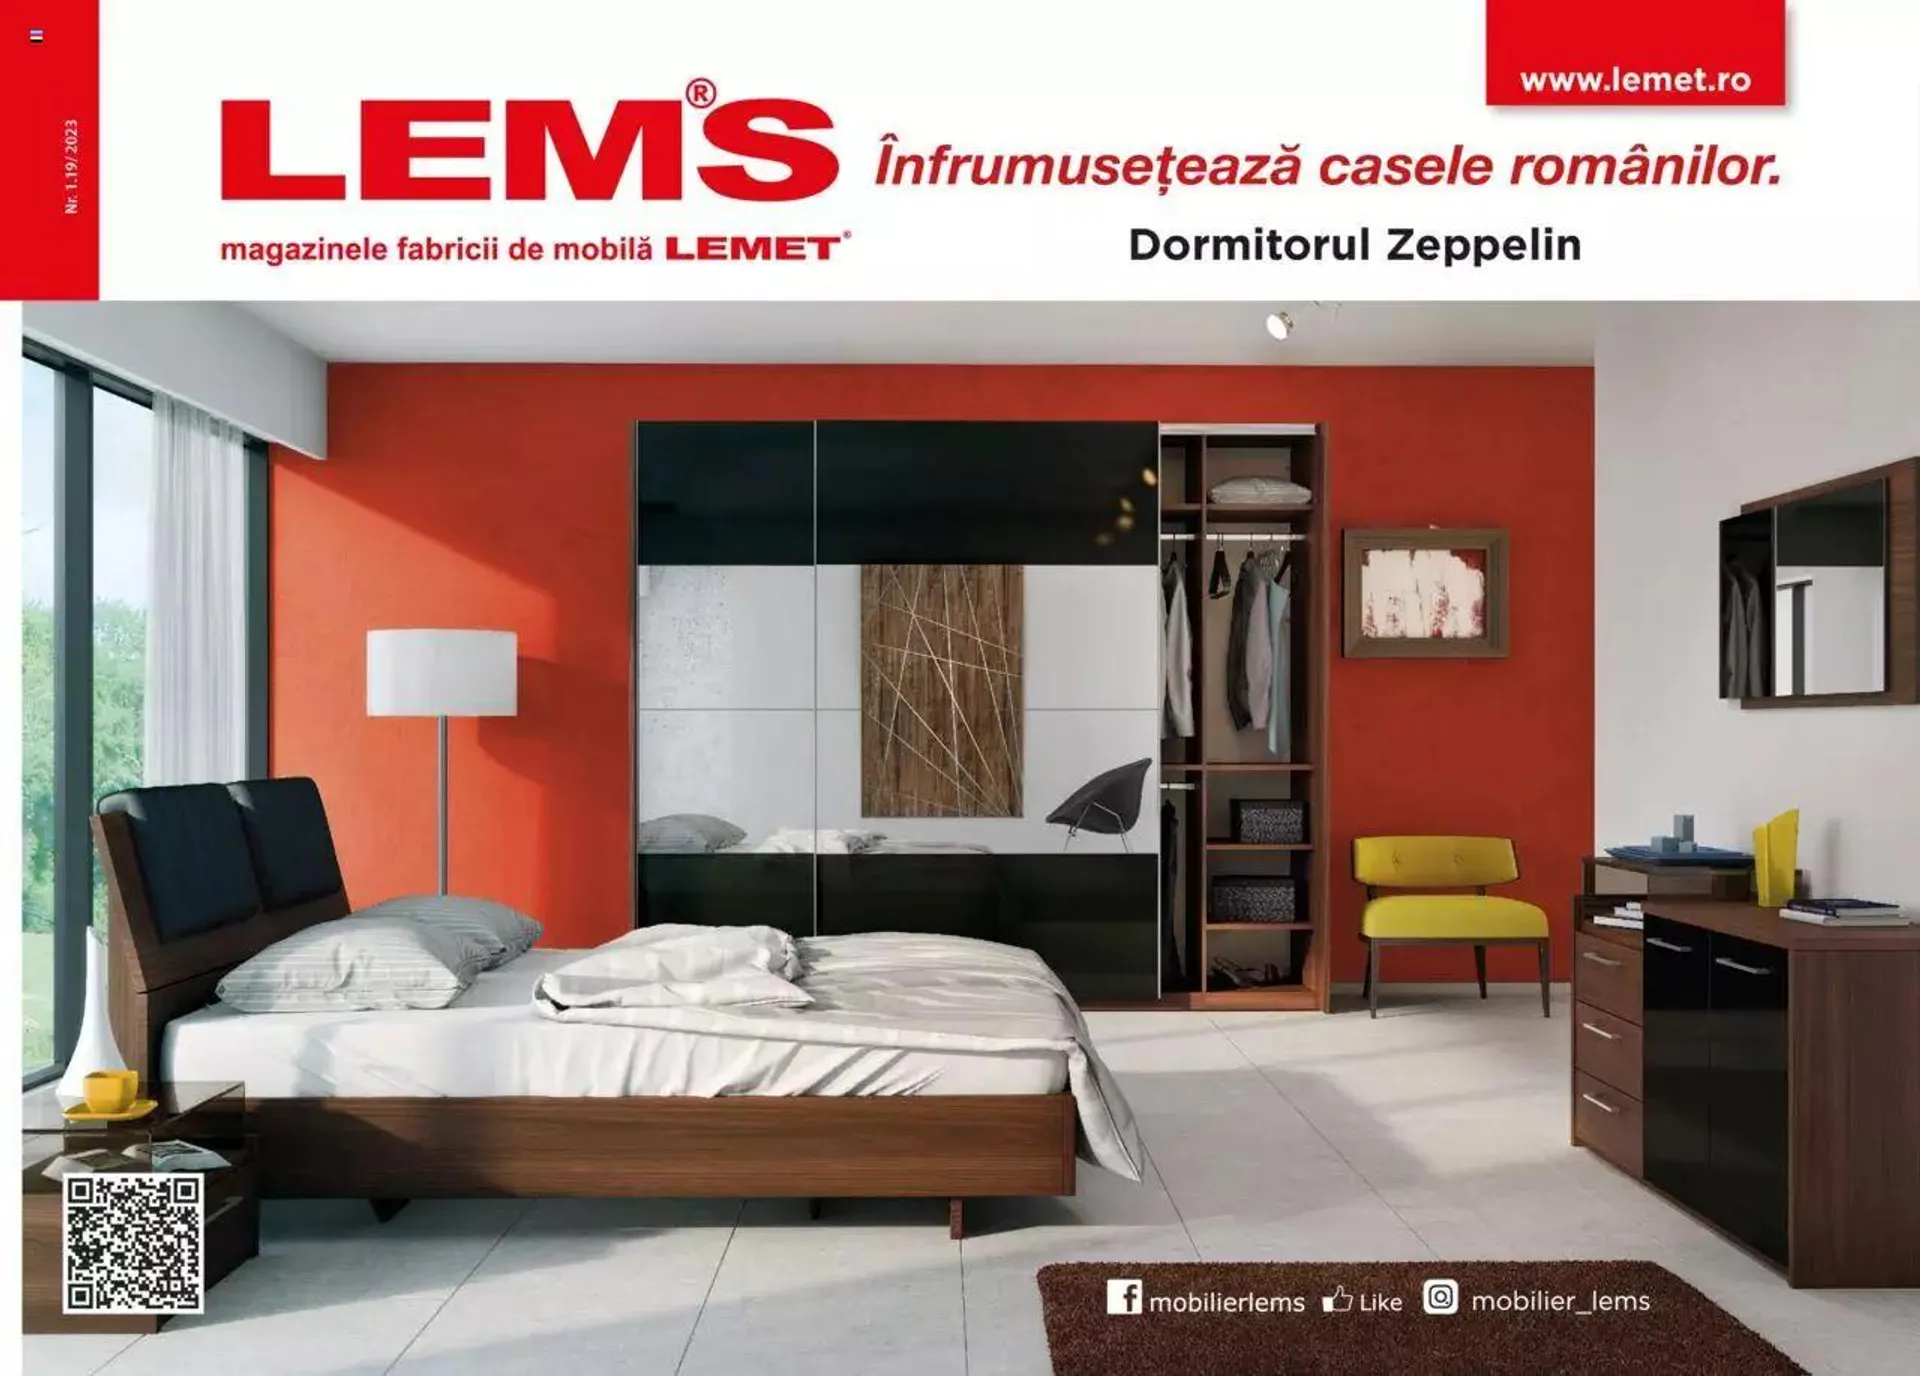 Lem’s catalog - Dormitor Zeppelin - 0